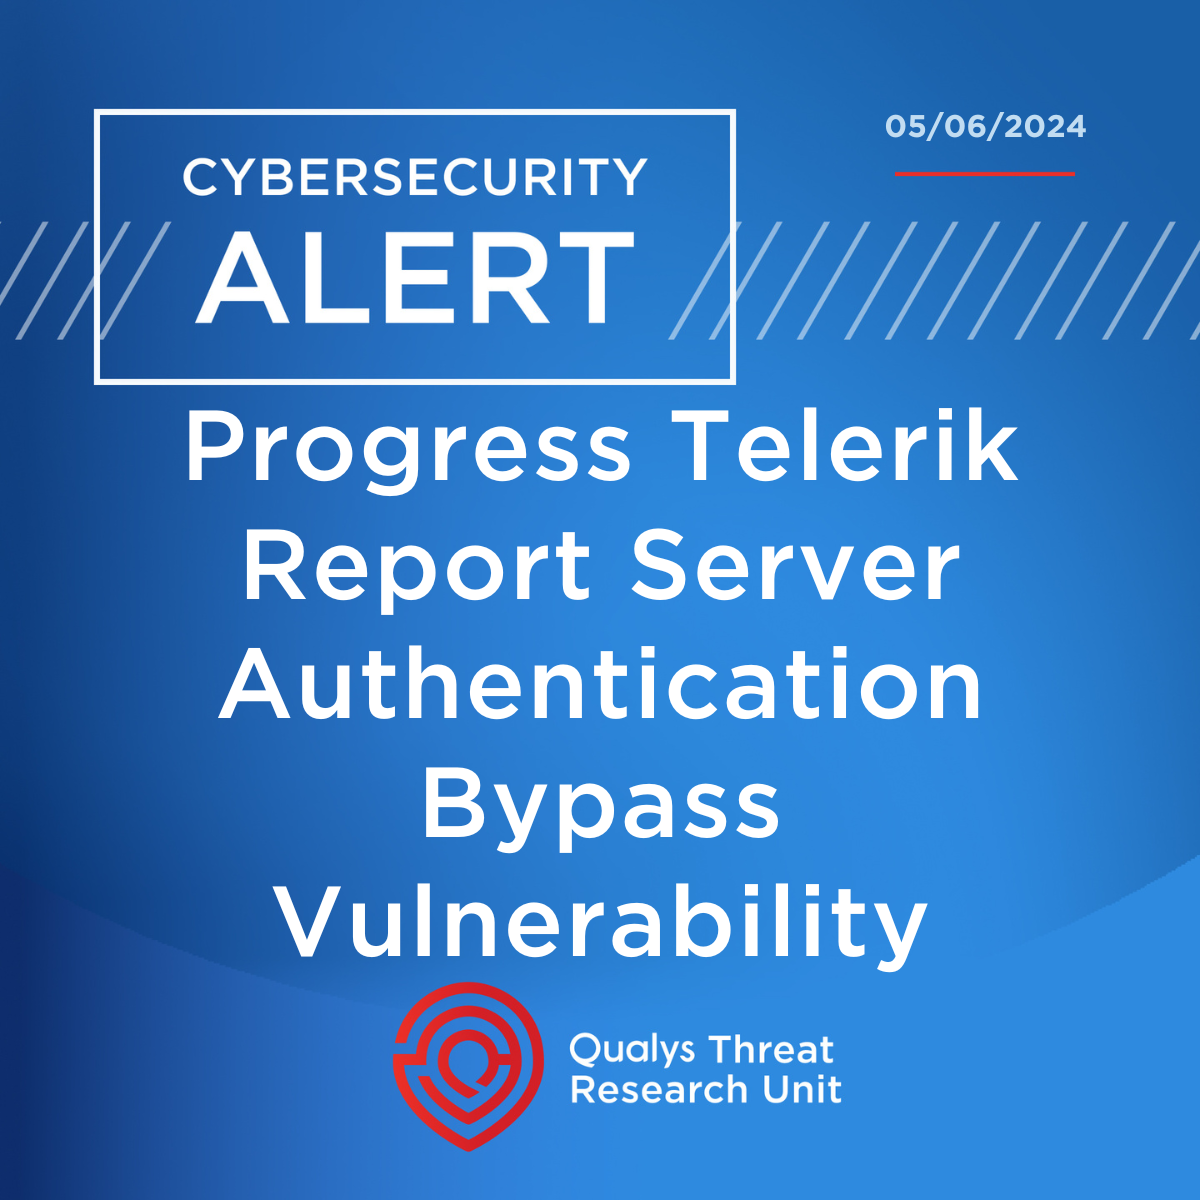 Progress Telerik Report Server Authentication Bypass Vulnerability (CVE-2024-4358)